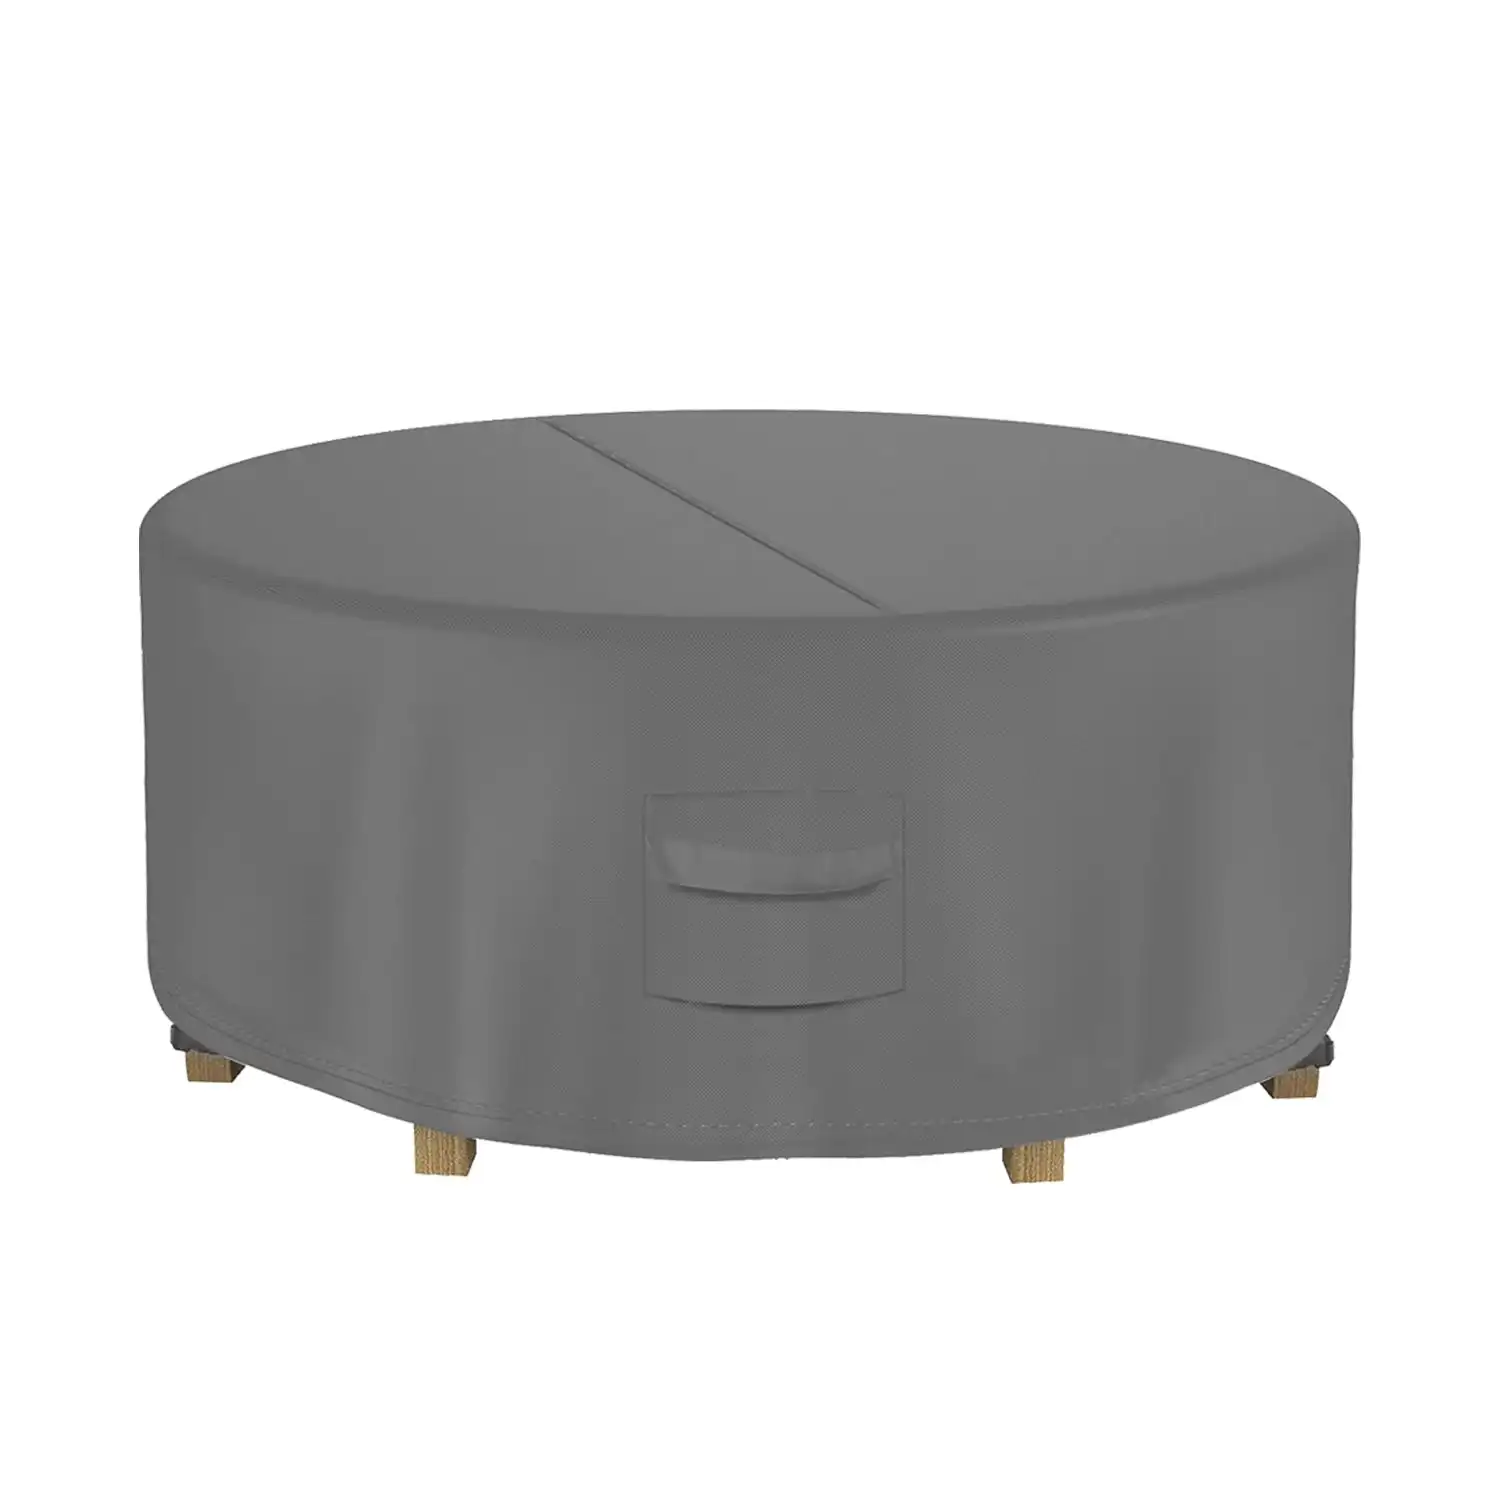 Kozyard Waterproof Round Patio Furniture Table Cover 190x70cm